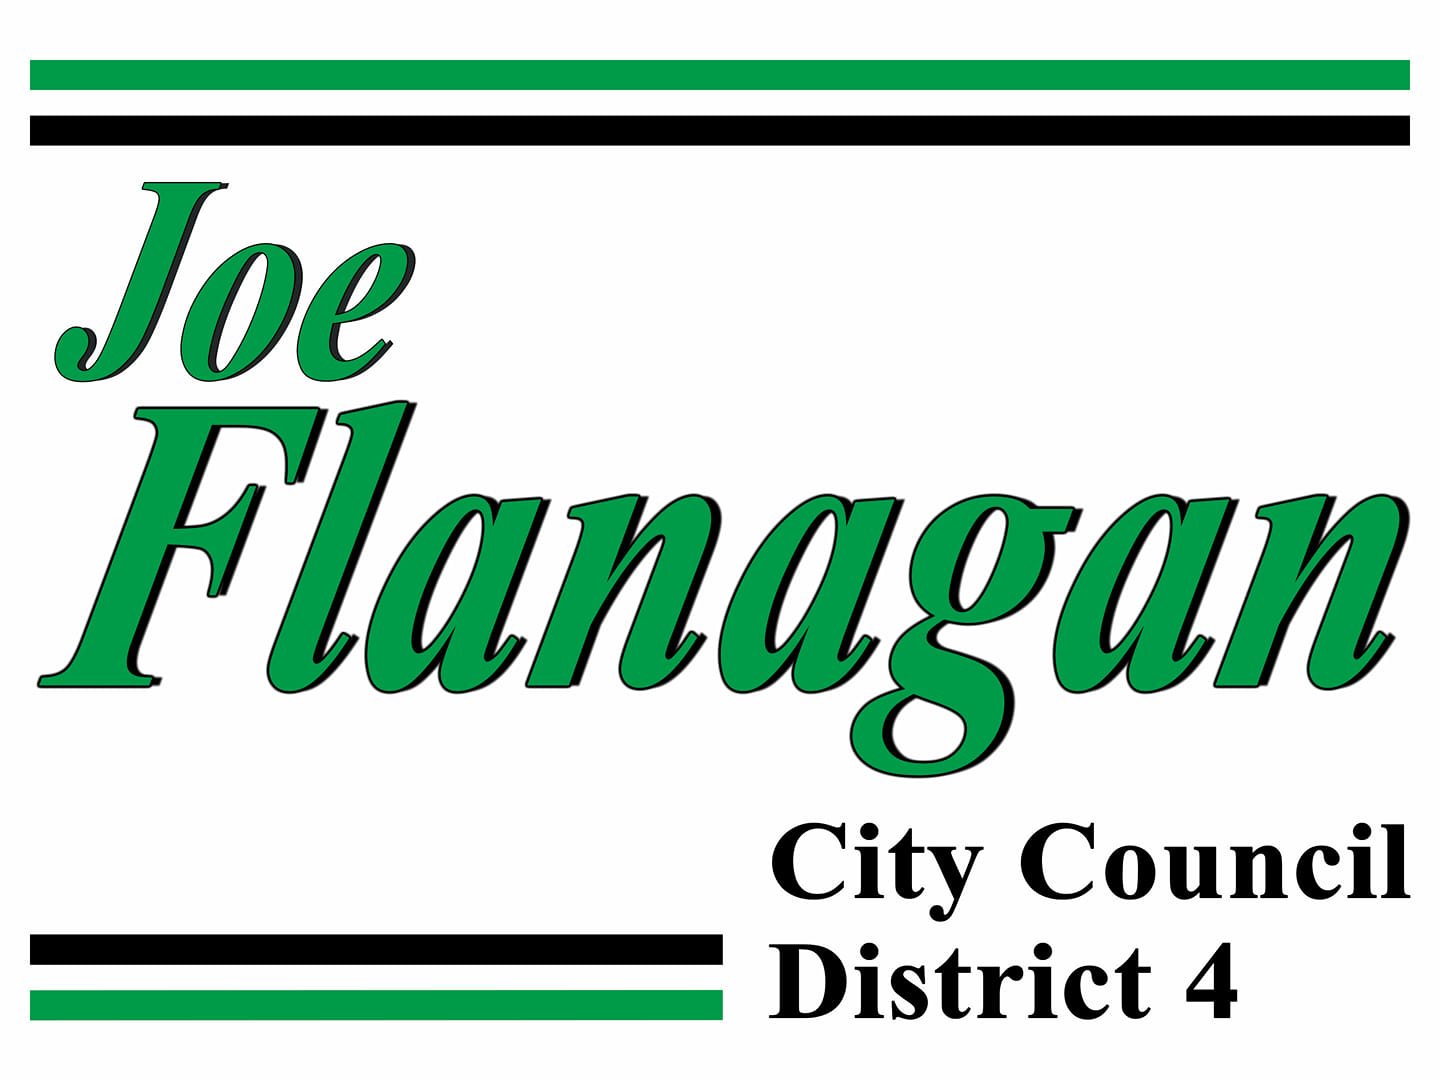 Elect Joe Flanagan logo